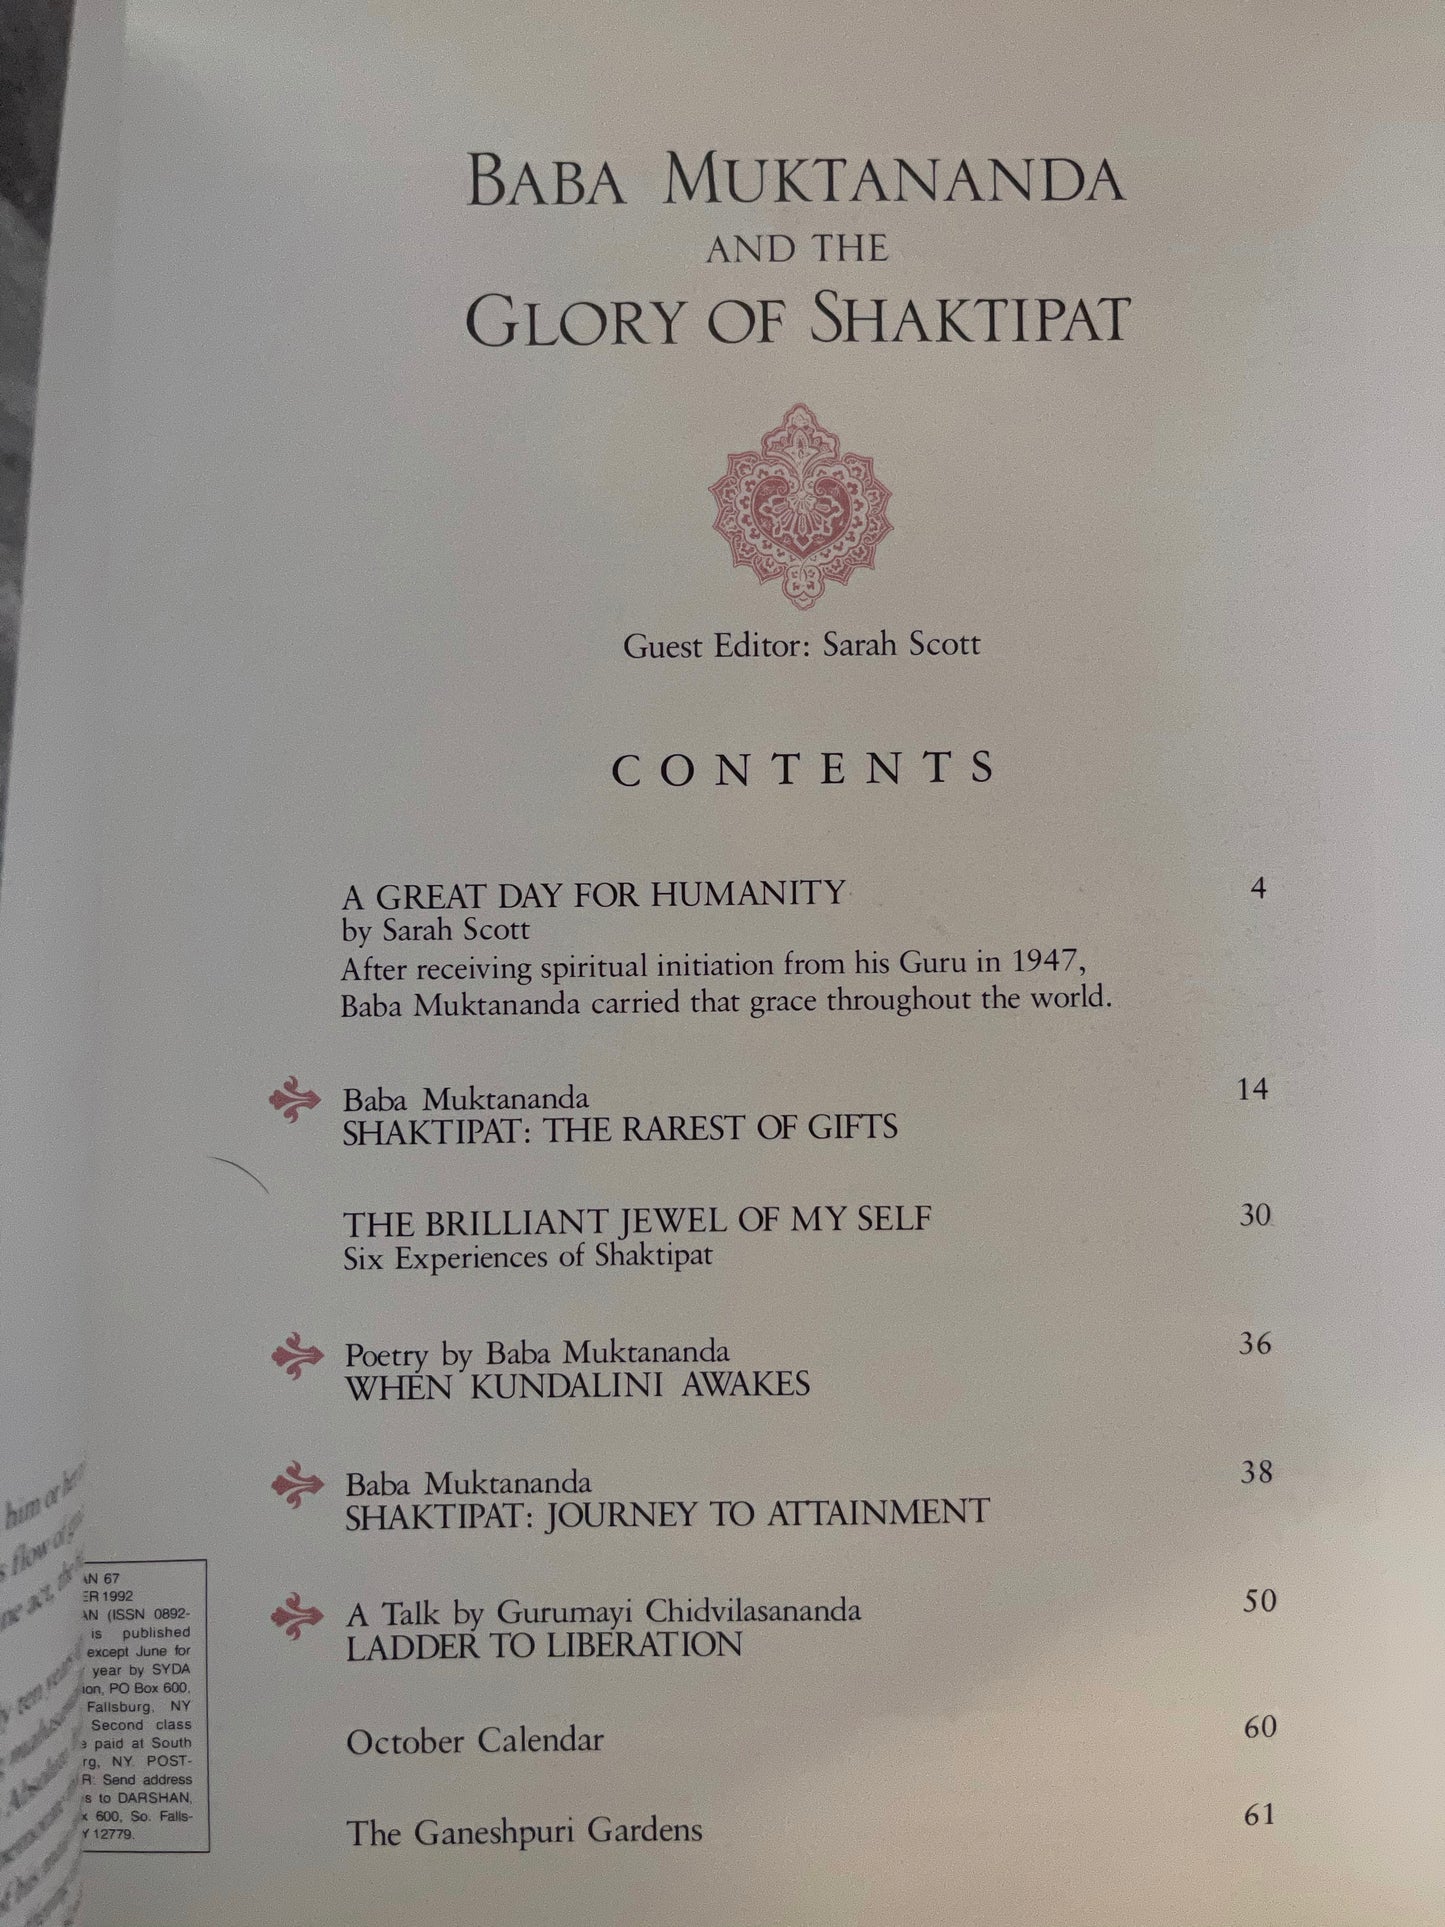 Darshan Magazine, In The Company of The Saints, Babamuktananda and The Glory of Shaktipat